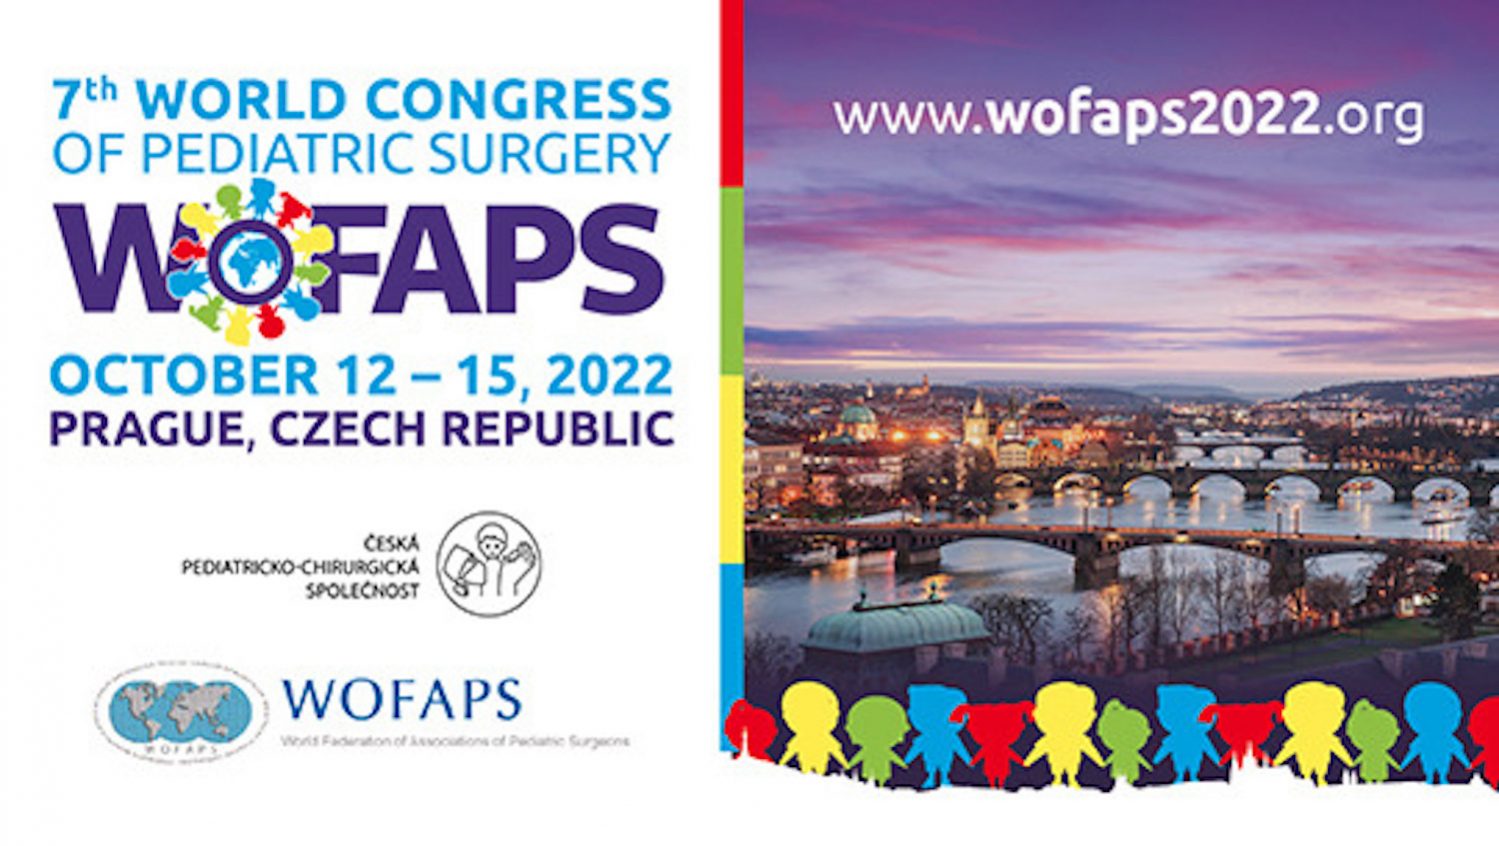 7th World Congress of Pediatric Surgery WOFAPS